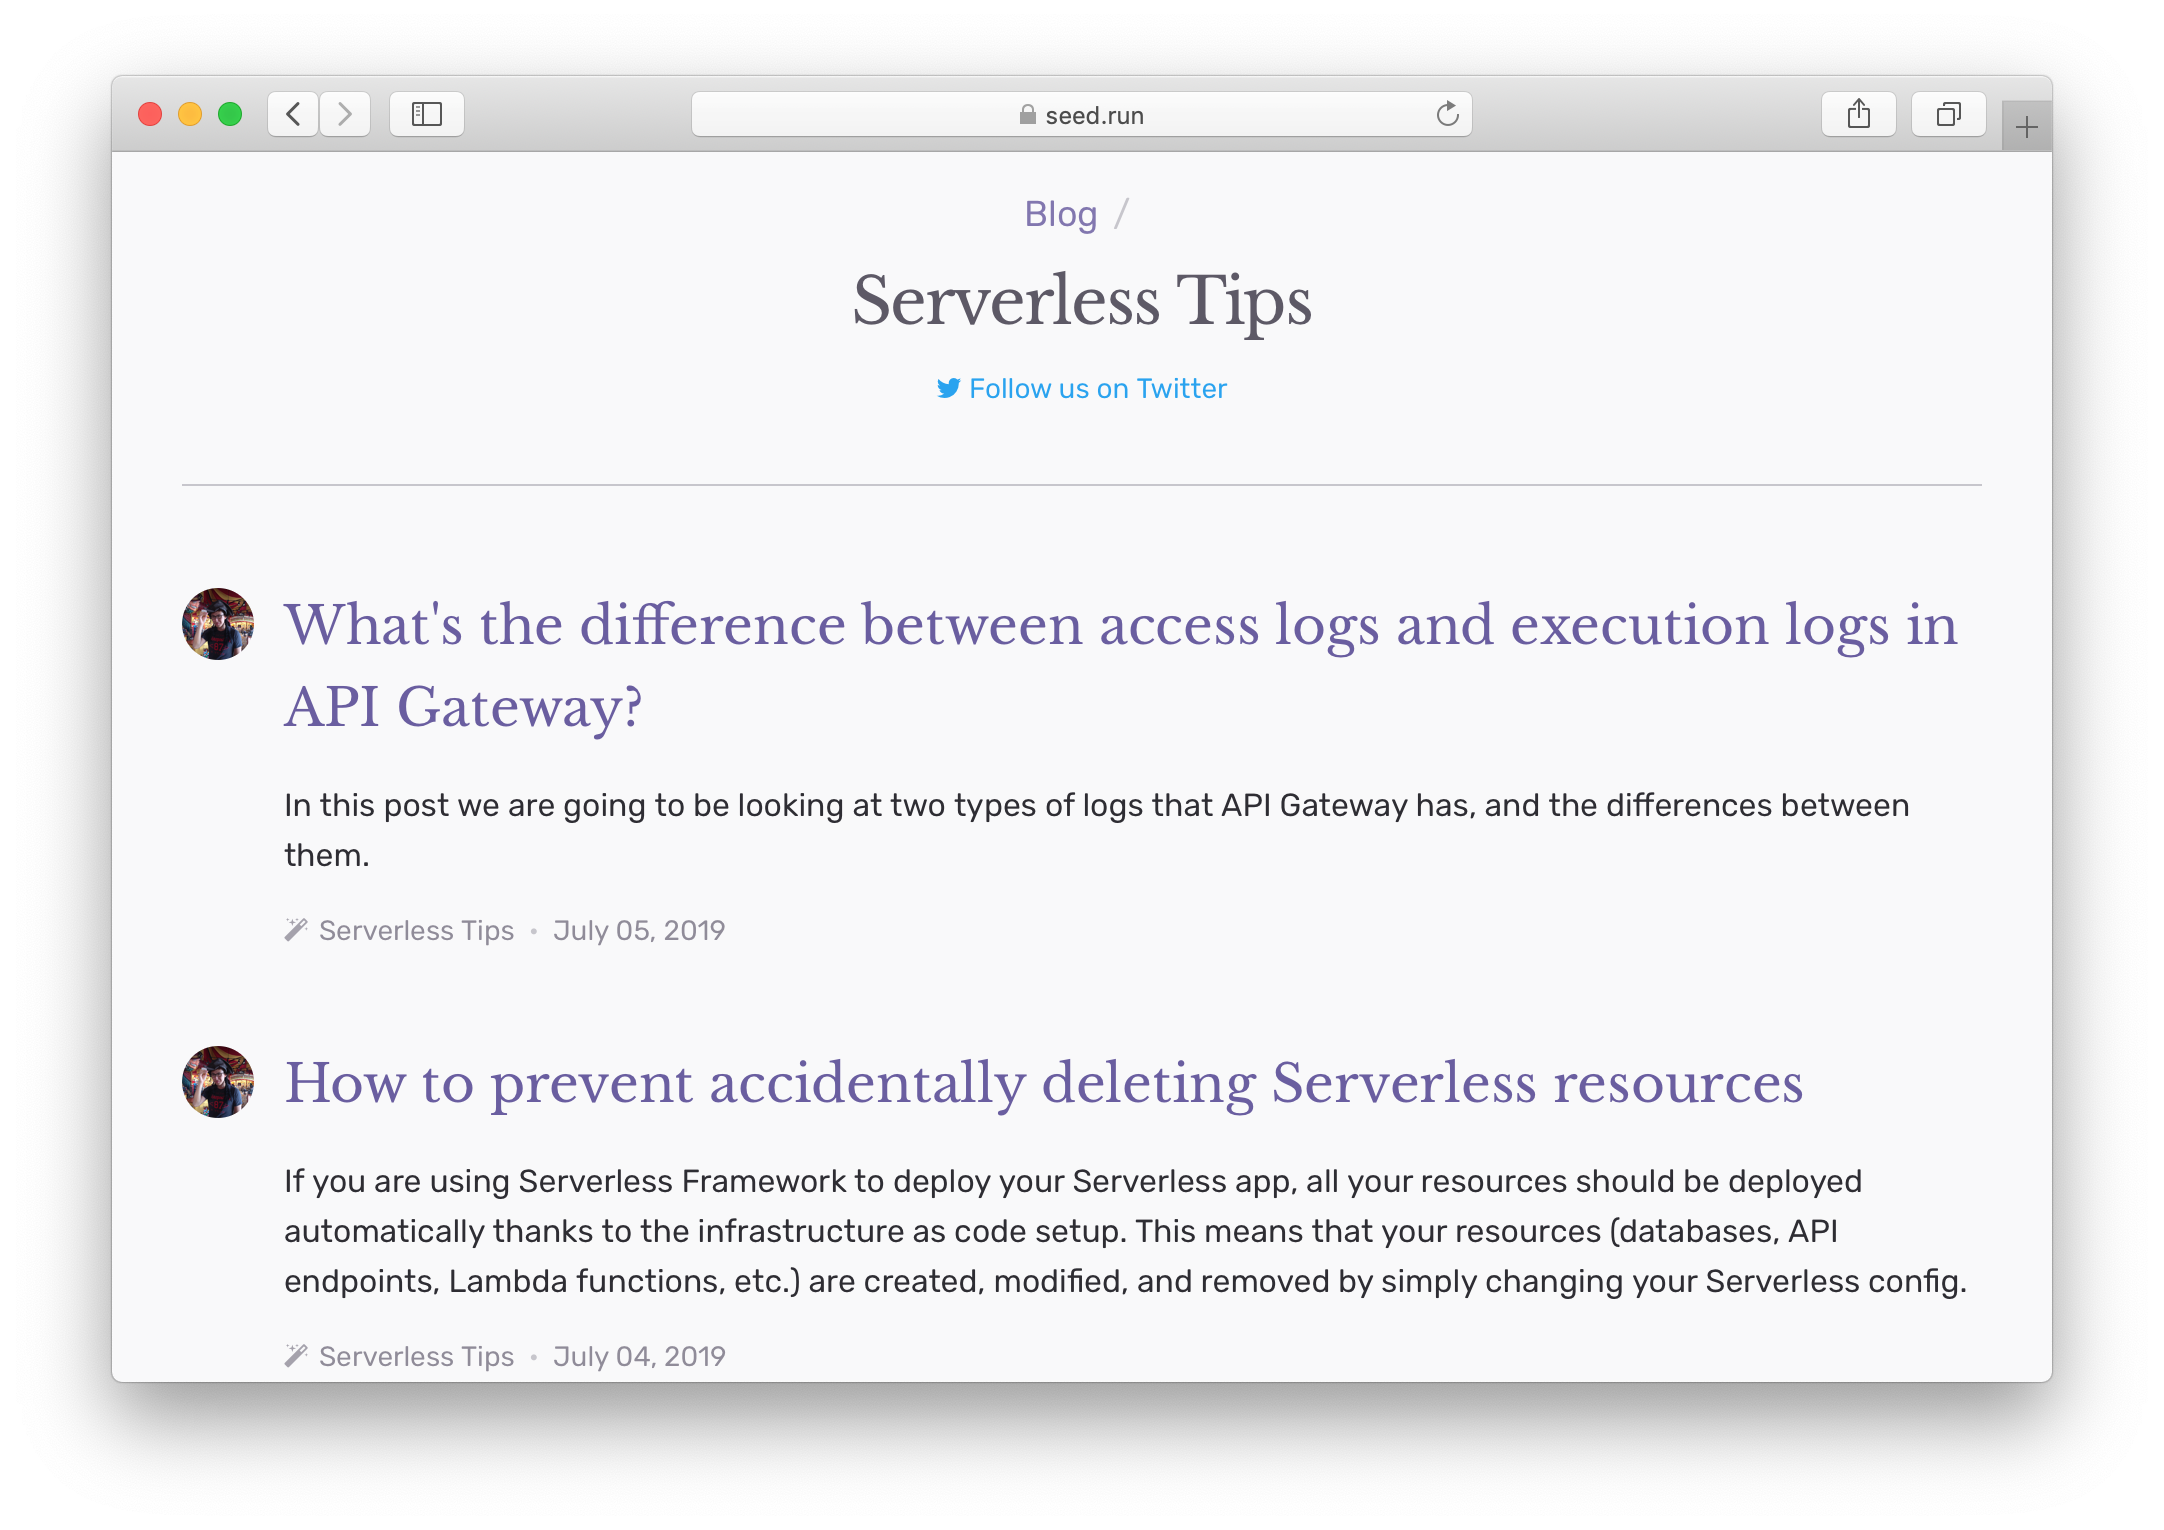 Serverless Tips Seed blog